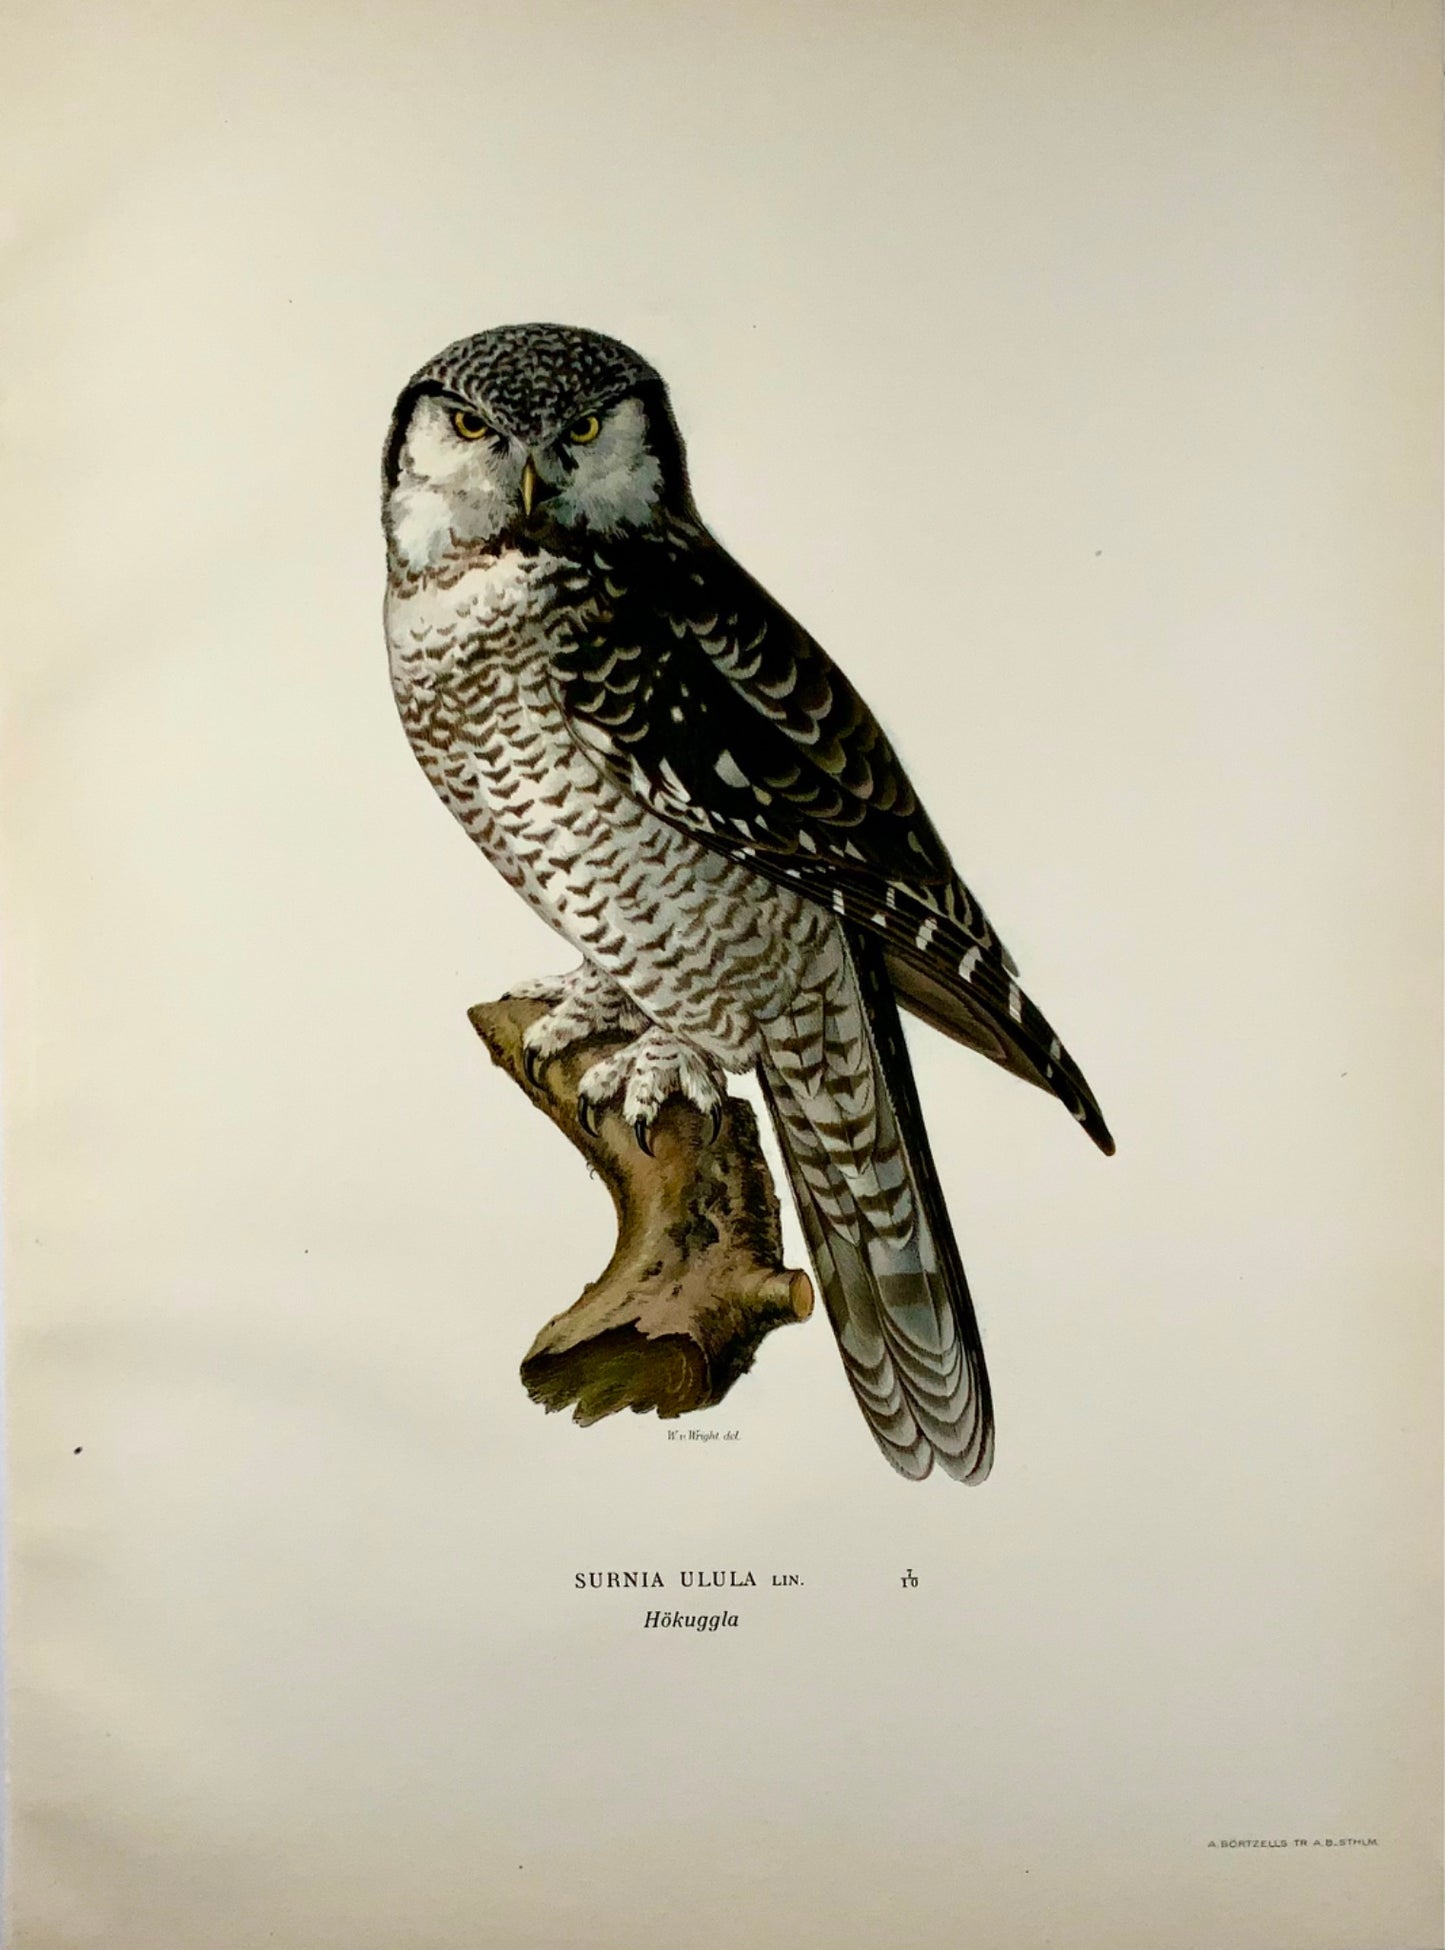 1918 Von Wright, Hawk-Owl, grande lithographie in-folio, ornithologie